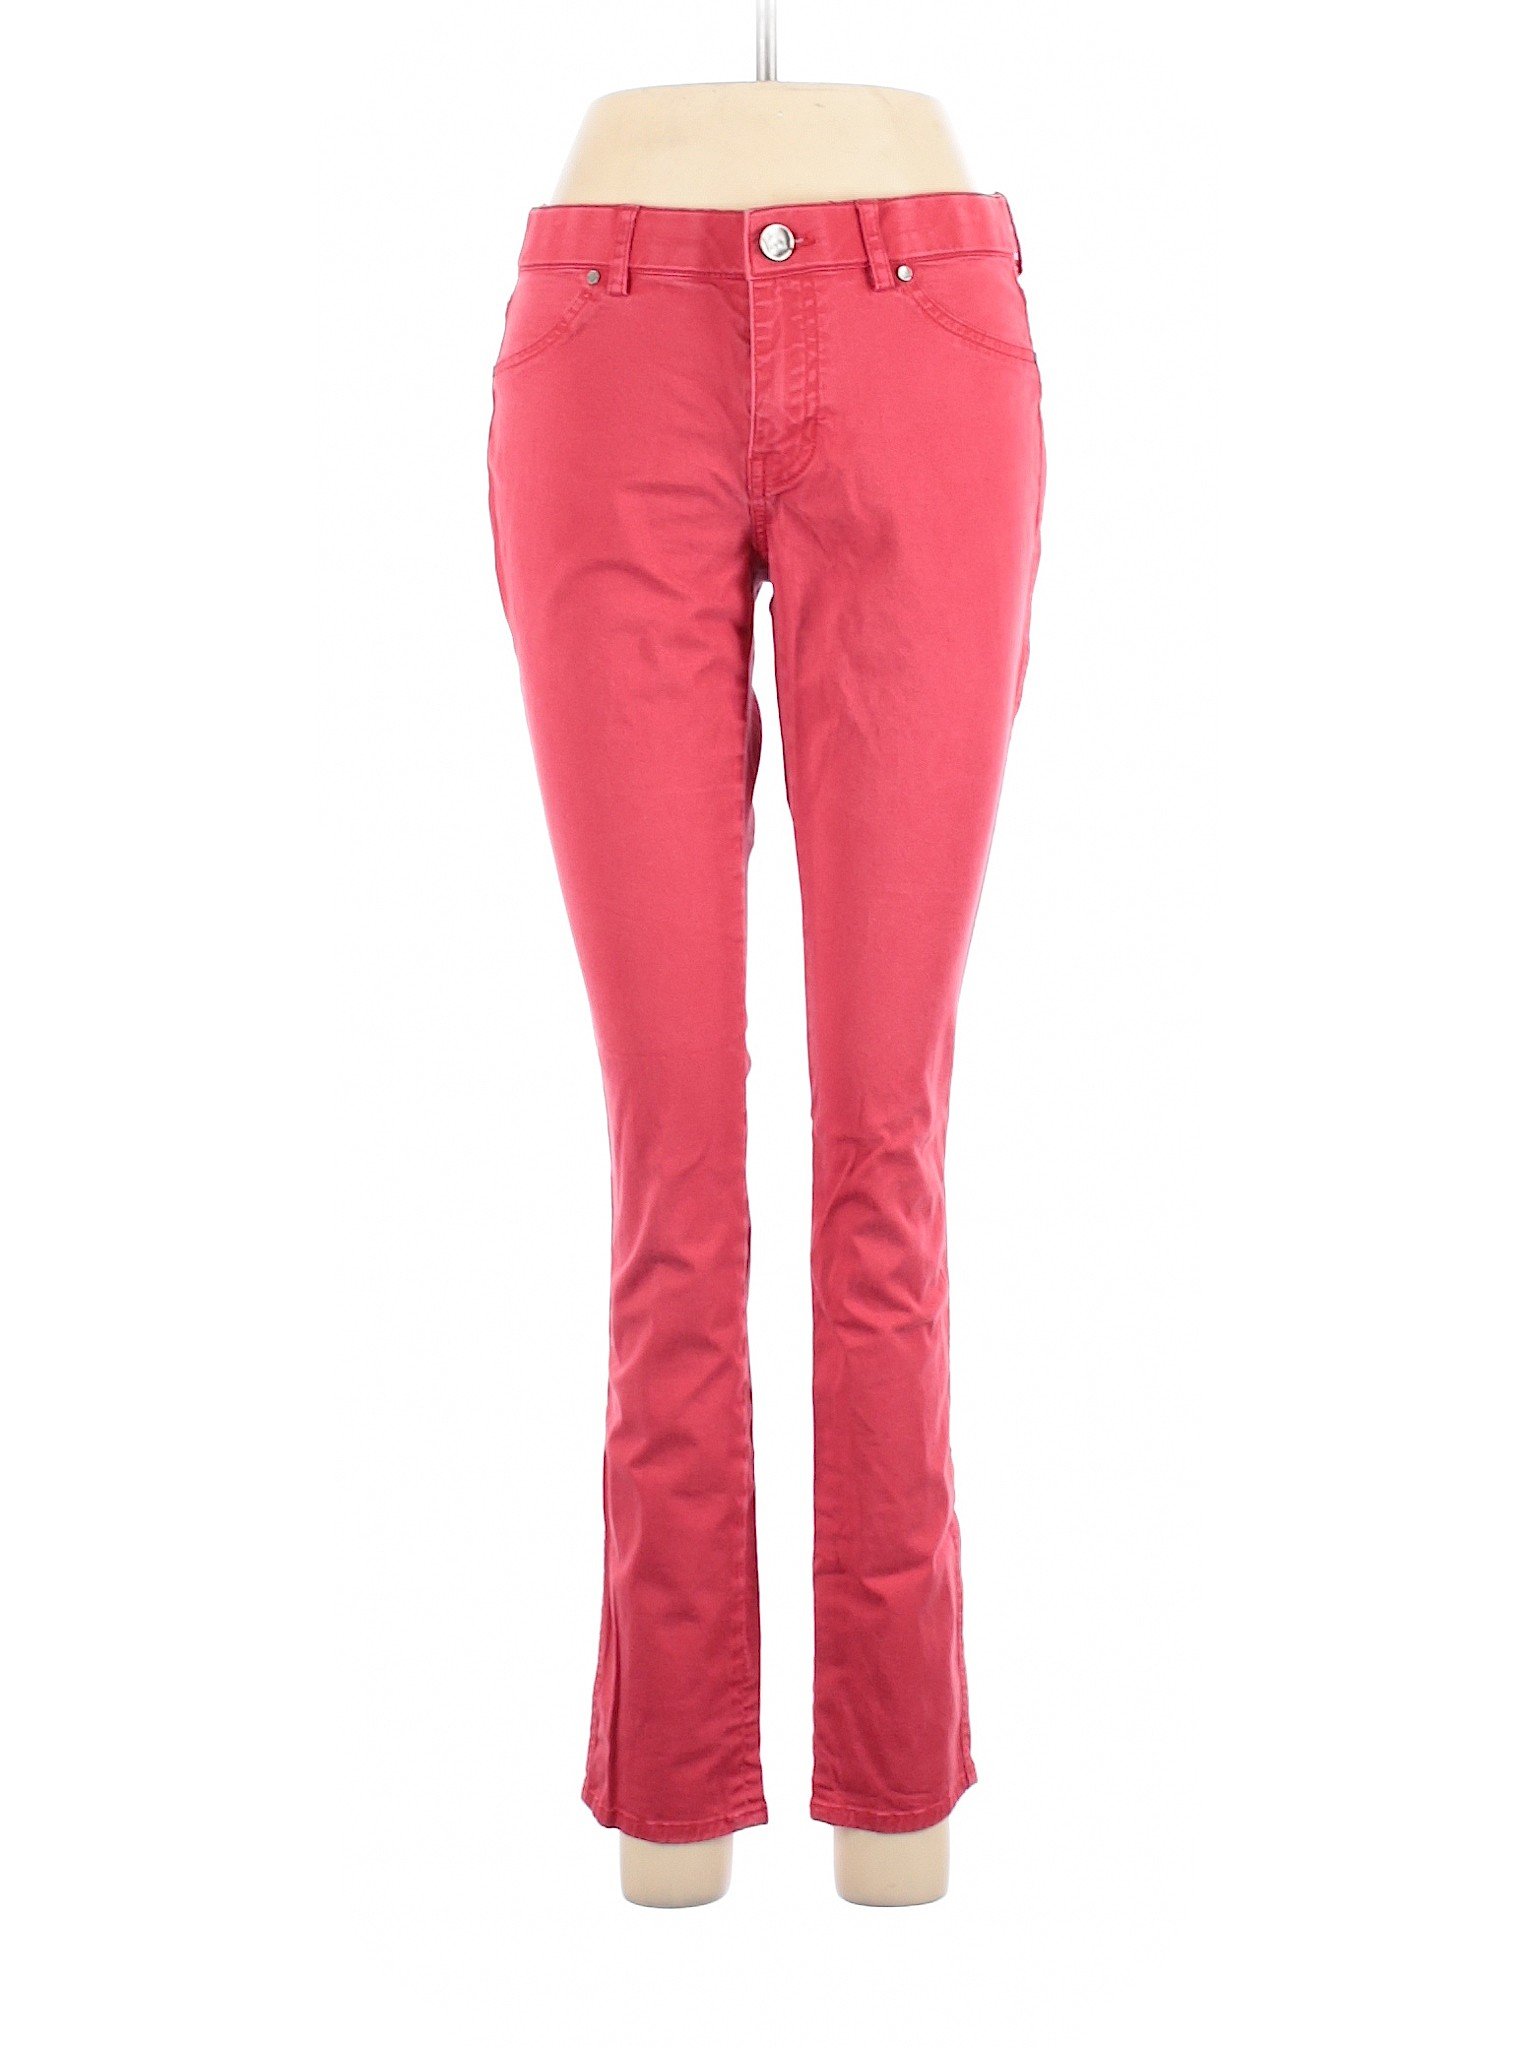 Tahari Women Pink Jeans 6 | eBay